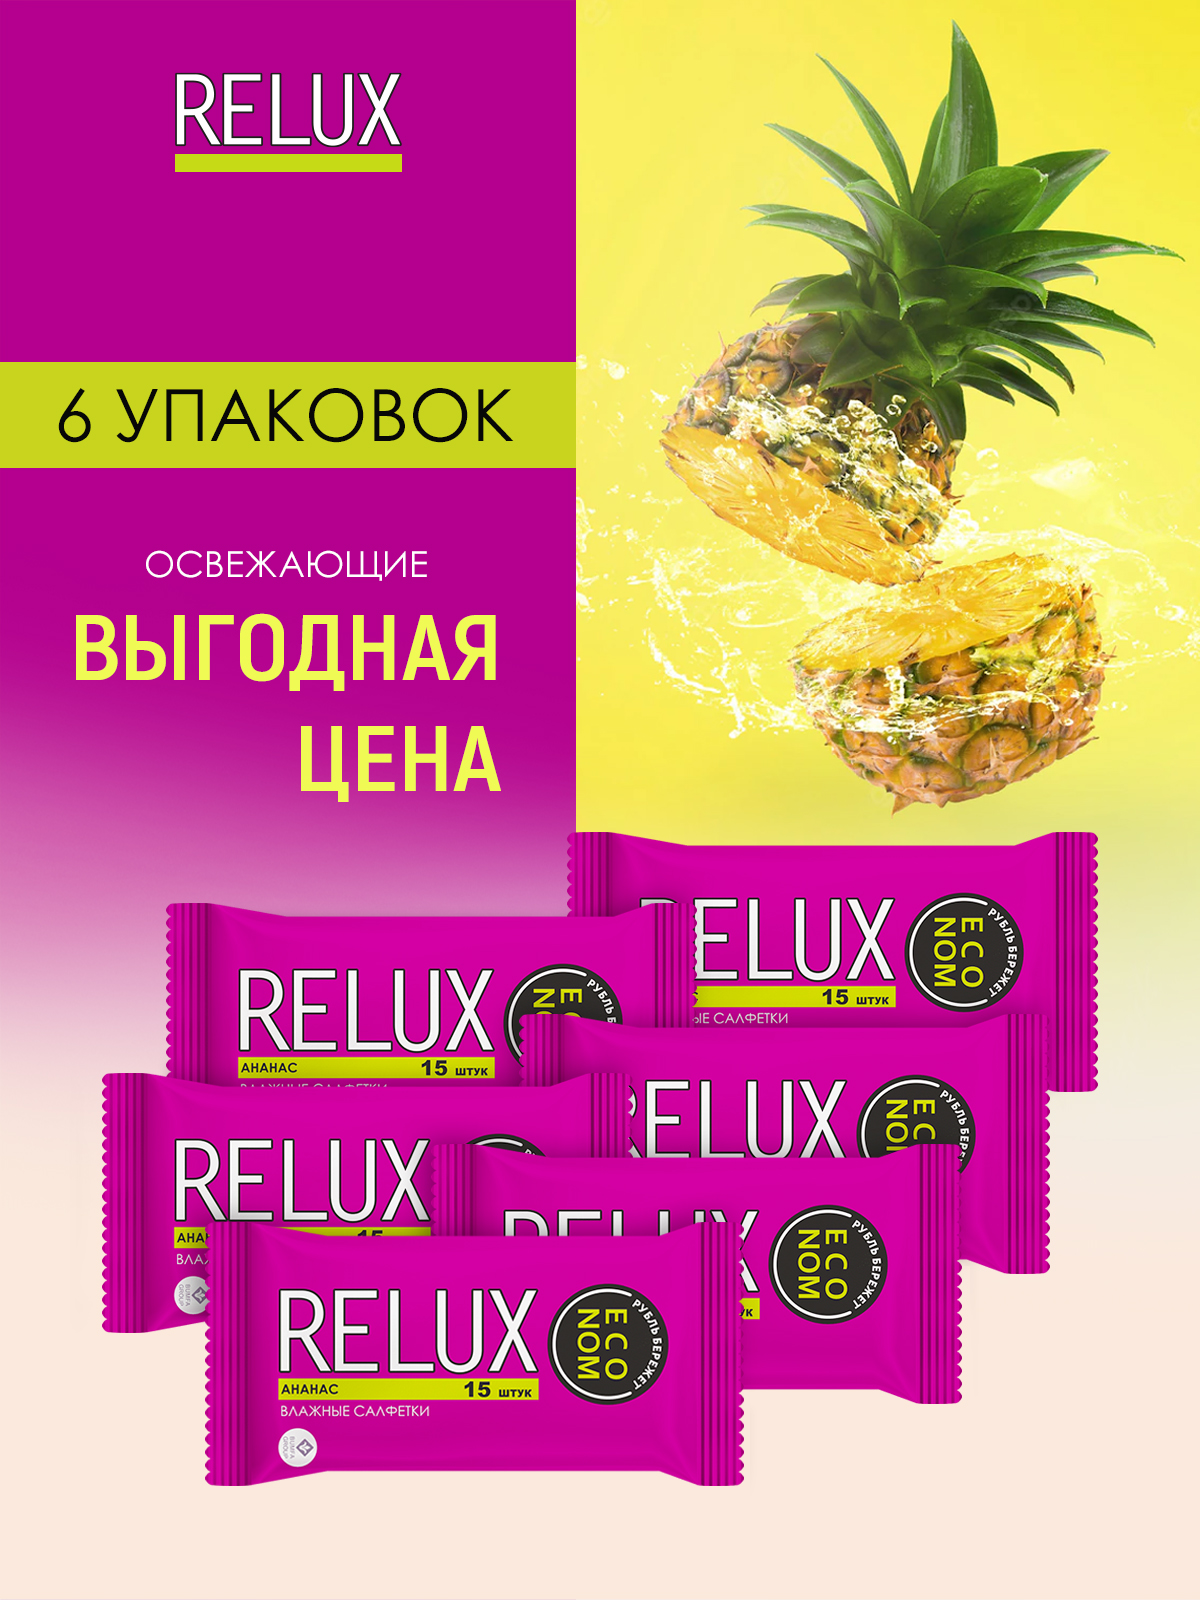 Салфетки влажные Relux освежающие ананас 15шт 6 упаковок